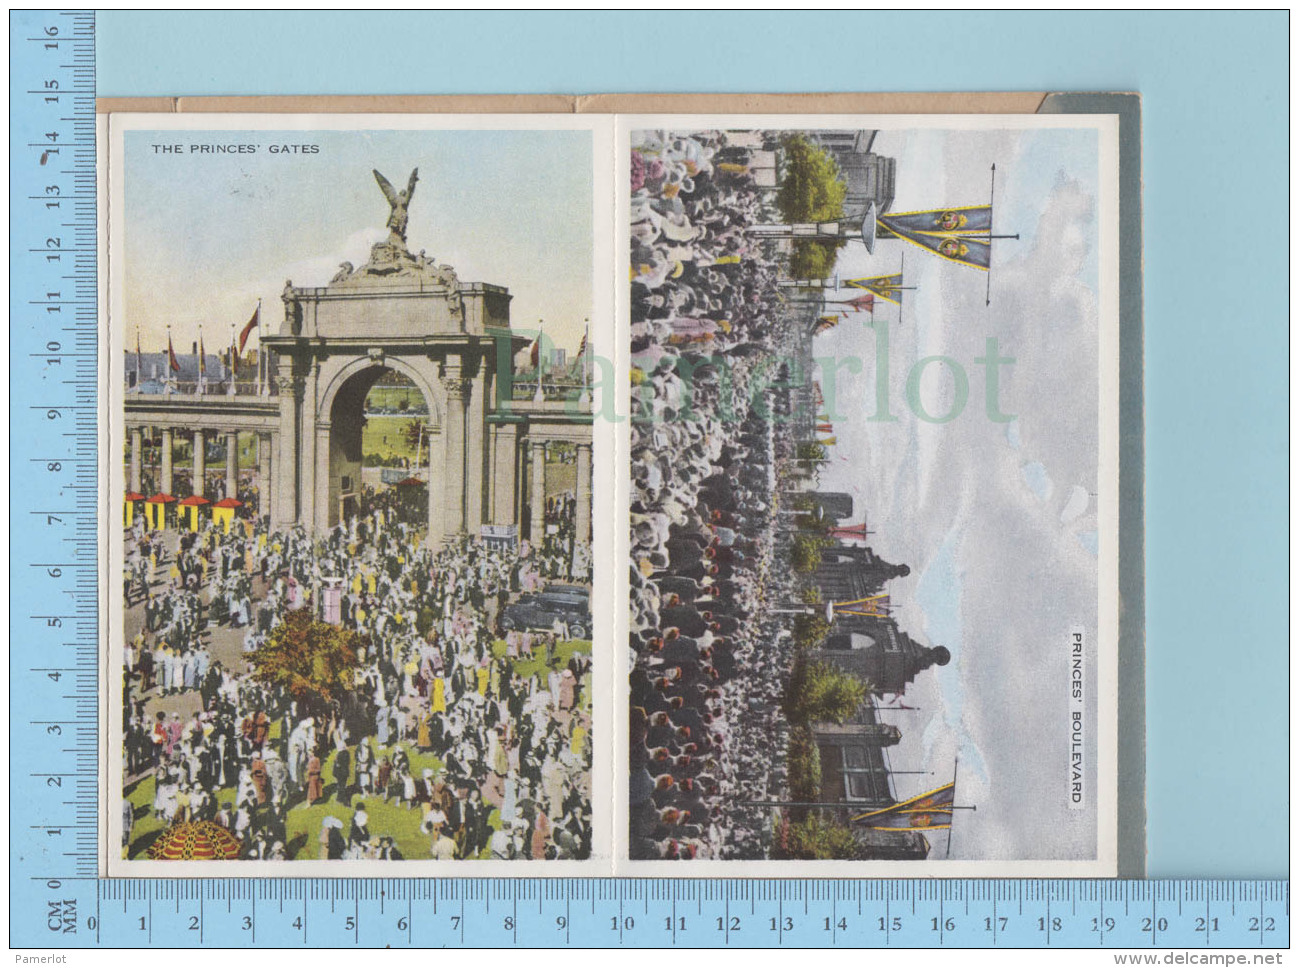 Souvenir view  18 views - The Canadian National Exibition toronto 1937 - post card carte postale